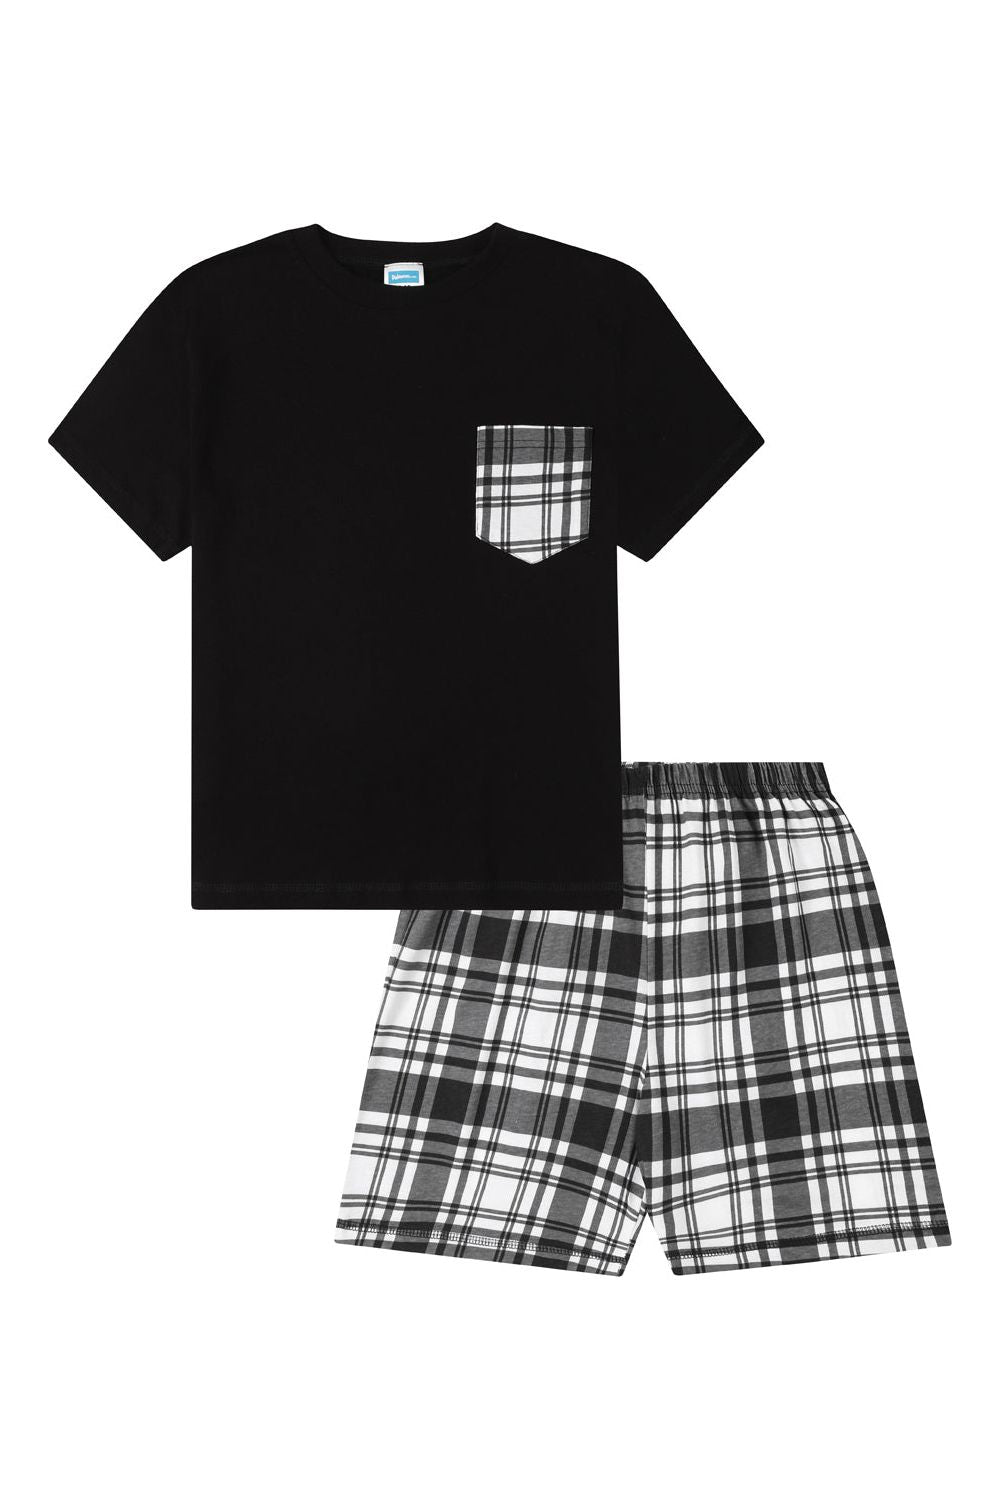 Boys Black and White Check Woven Short Pyjamas - Pyjamas.com